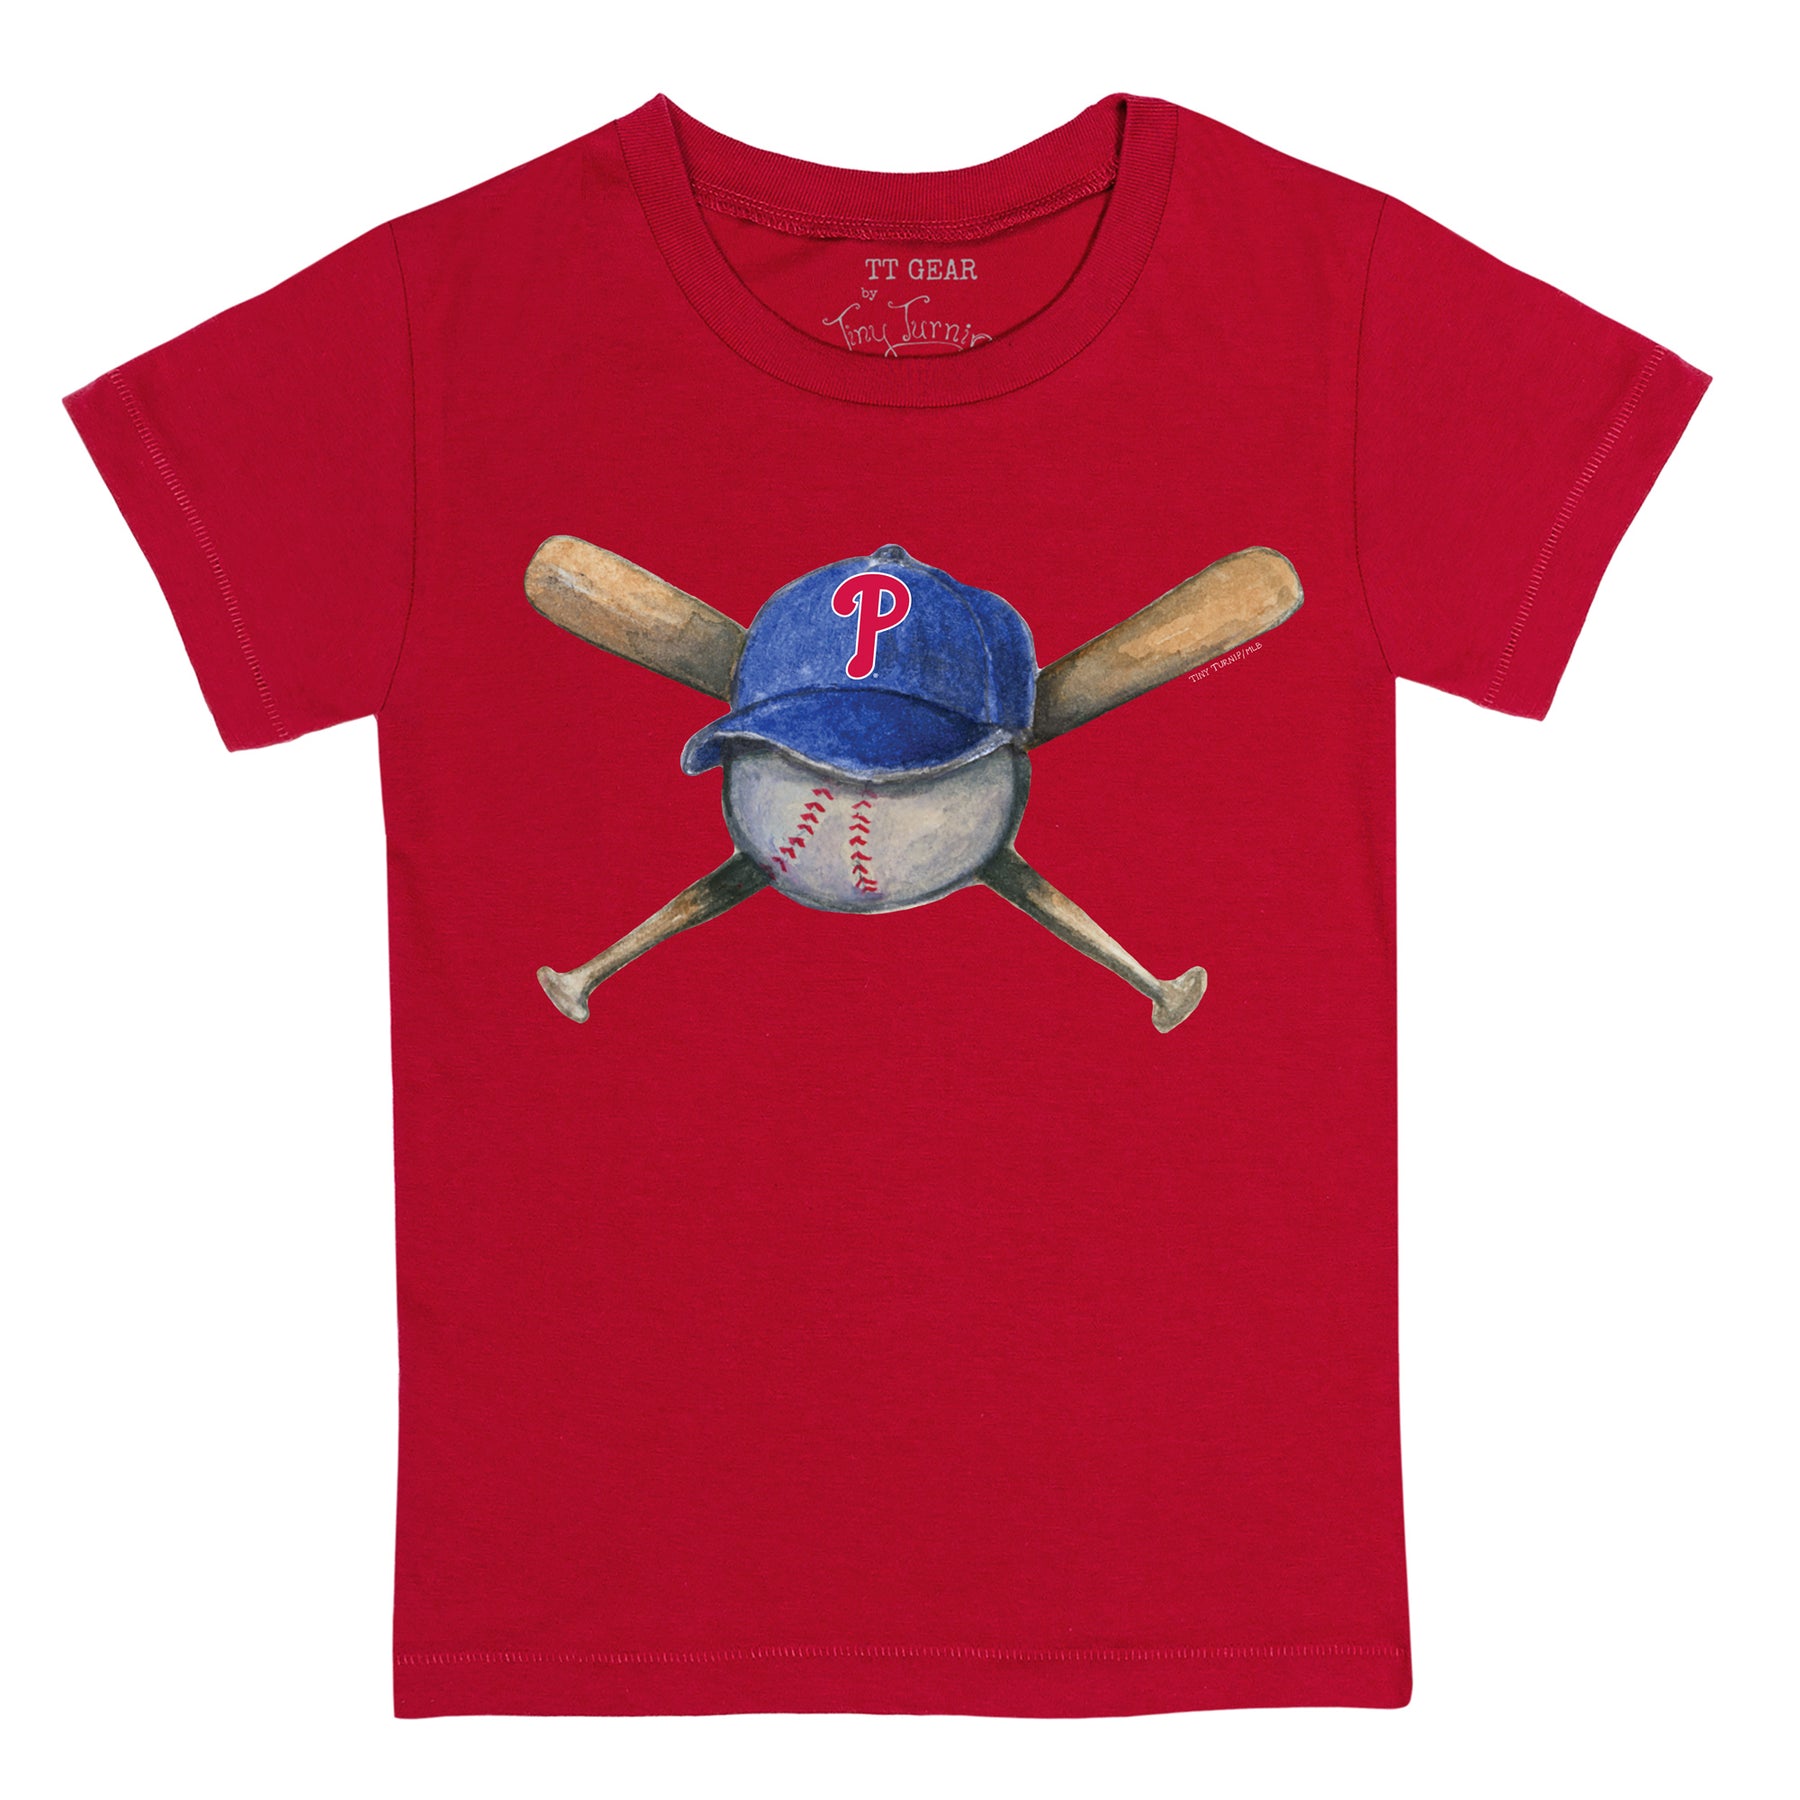 Lids Oakland Athletics Tiny Turnip Women's Hot Bats T-Shirt